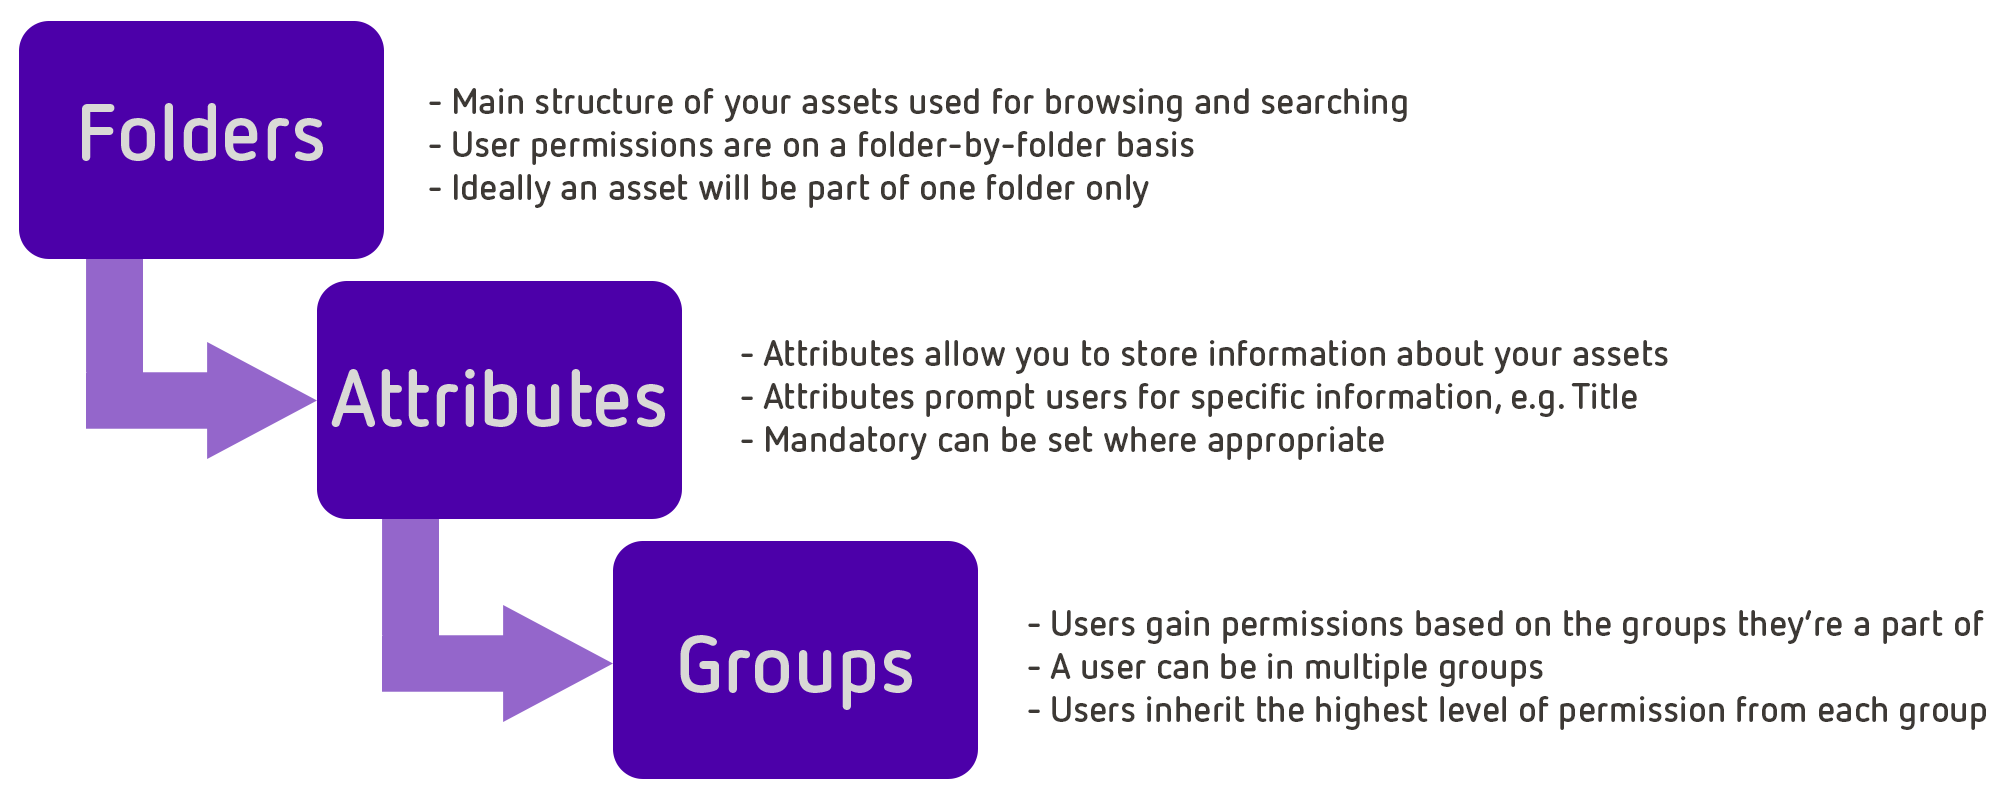 Folder_Attributes_Groups.png